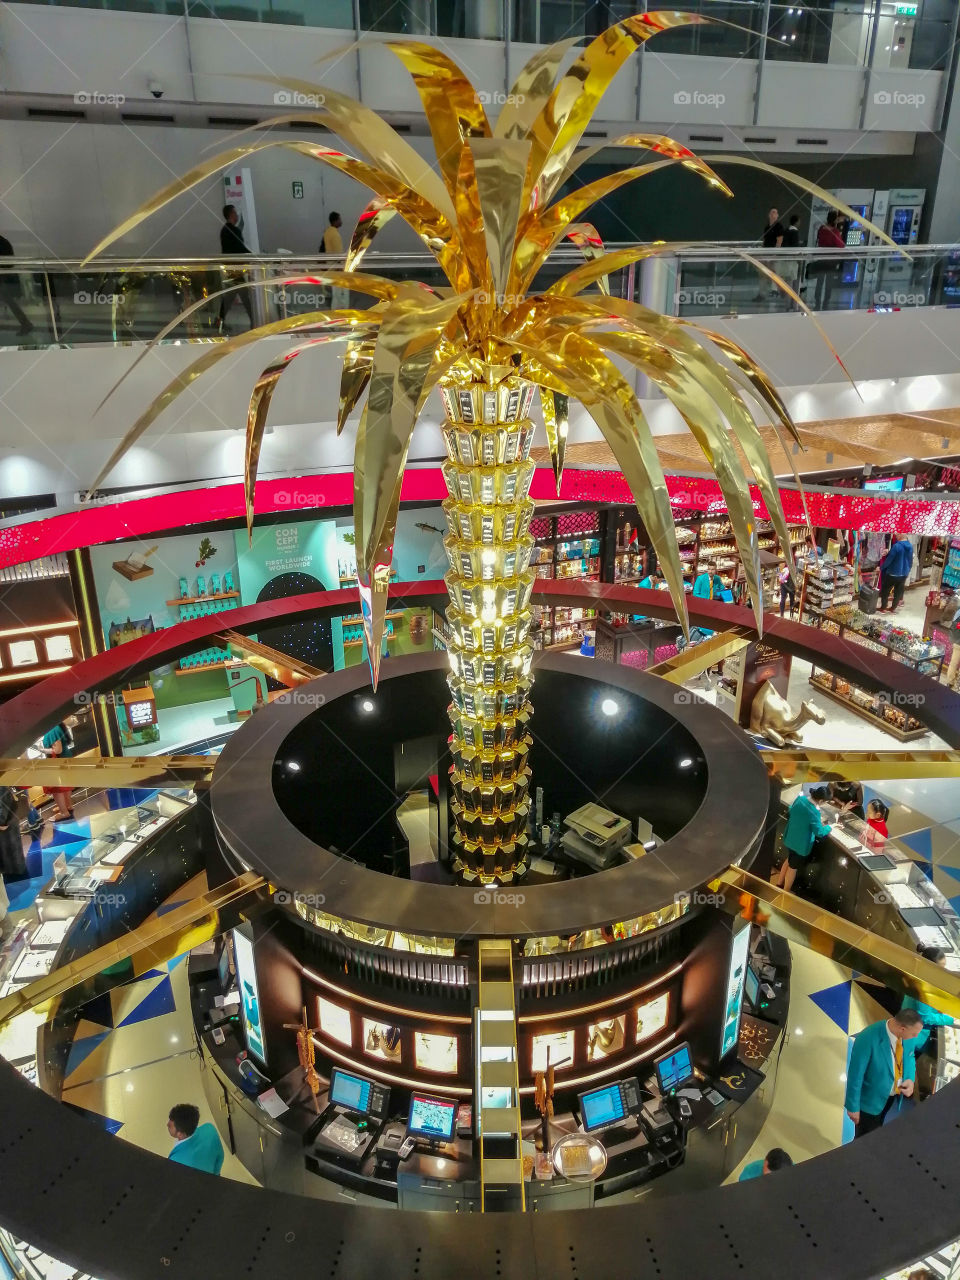 Dubai International Airport Duty-free decoration before Christmas